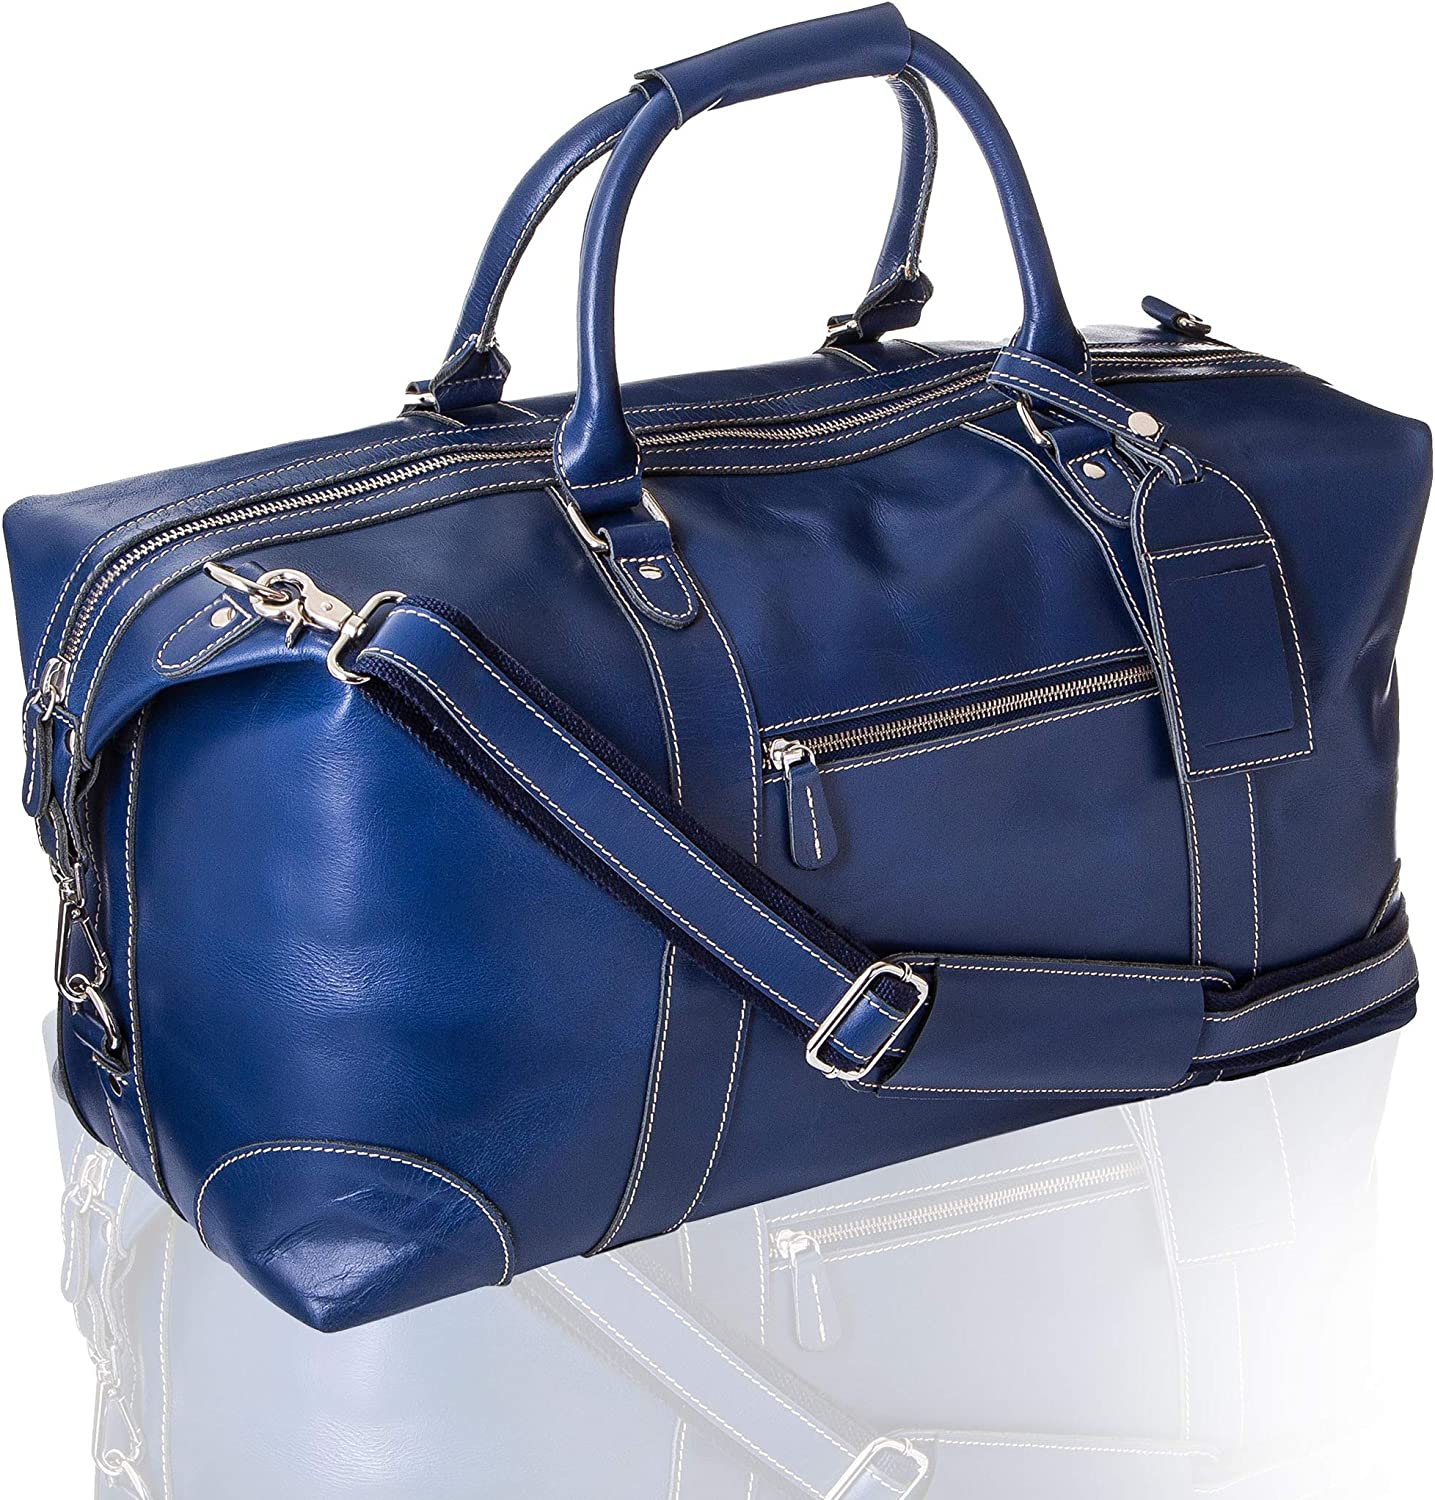 Vagabond Leather Duffle Travel Bag – Buckaroo Leather Products